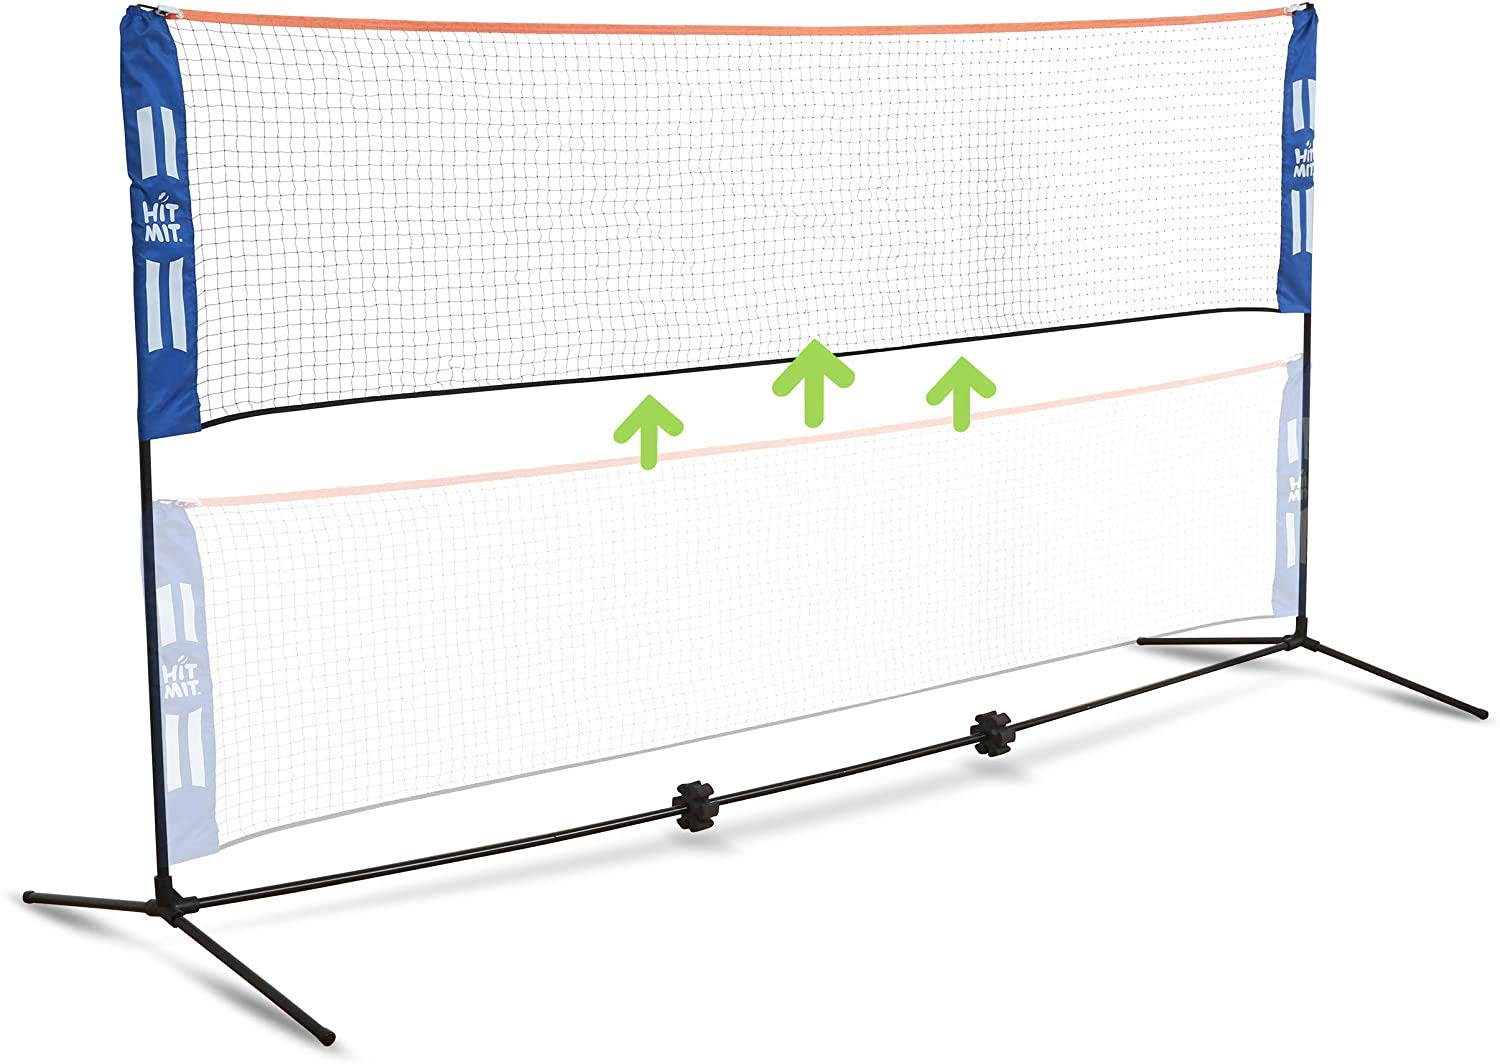 JOOLA HIT MIT 可调节高度便携式羽毛球网套装 - 竞赛多运动室内或室外球网，适合打匹克球、儿童排球、足球网球、草地网球 - 轻松快速组装